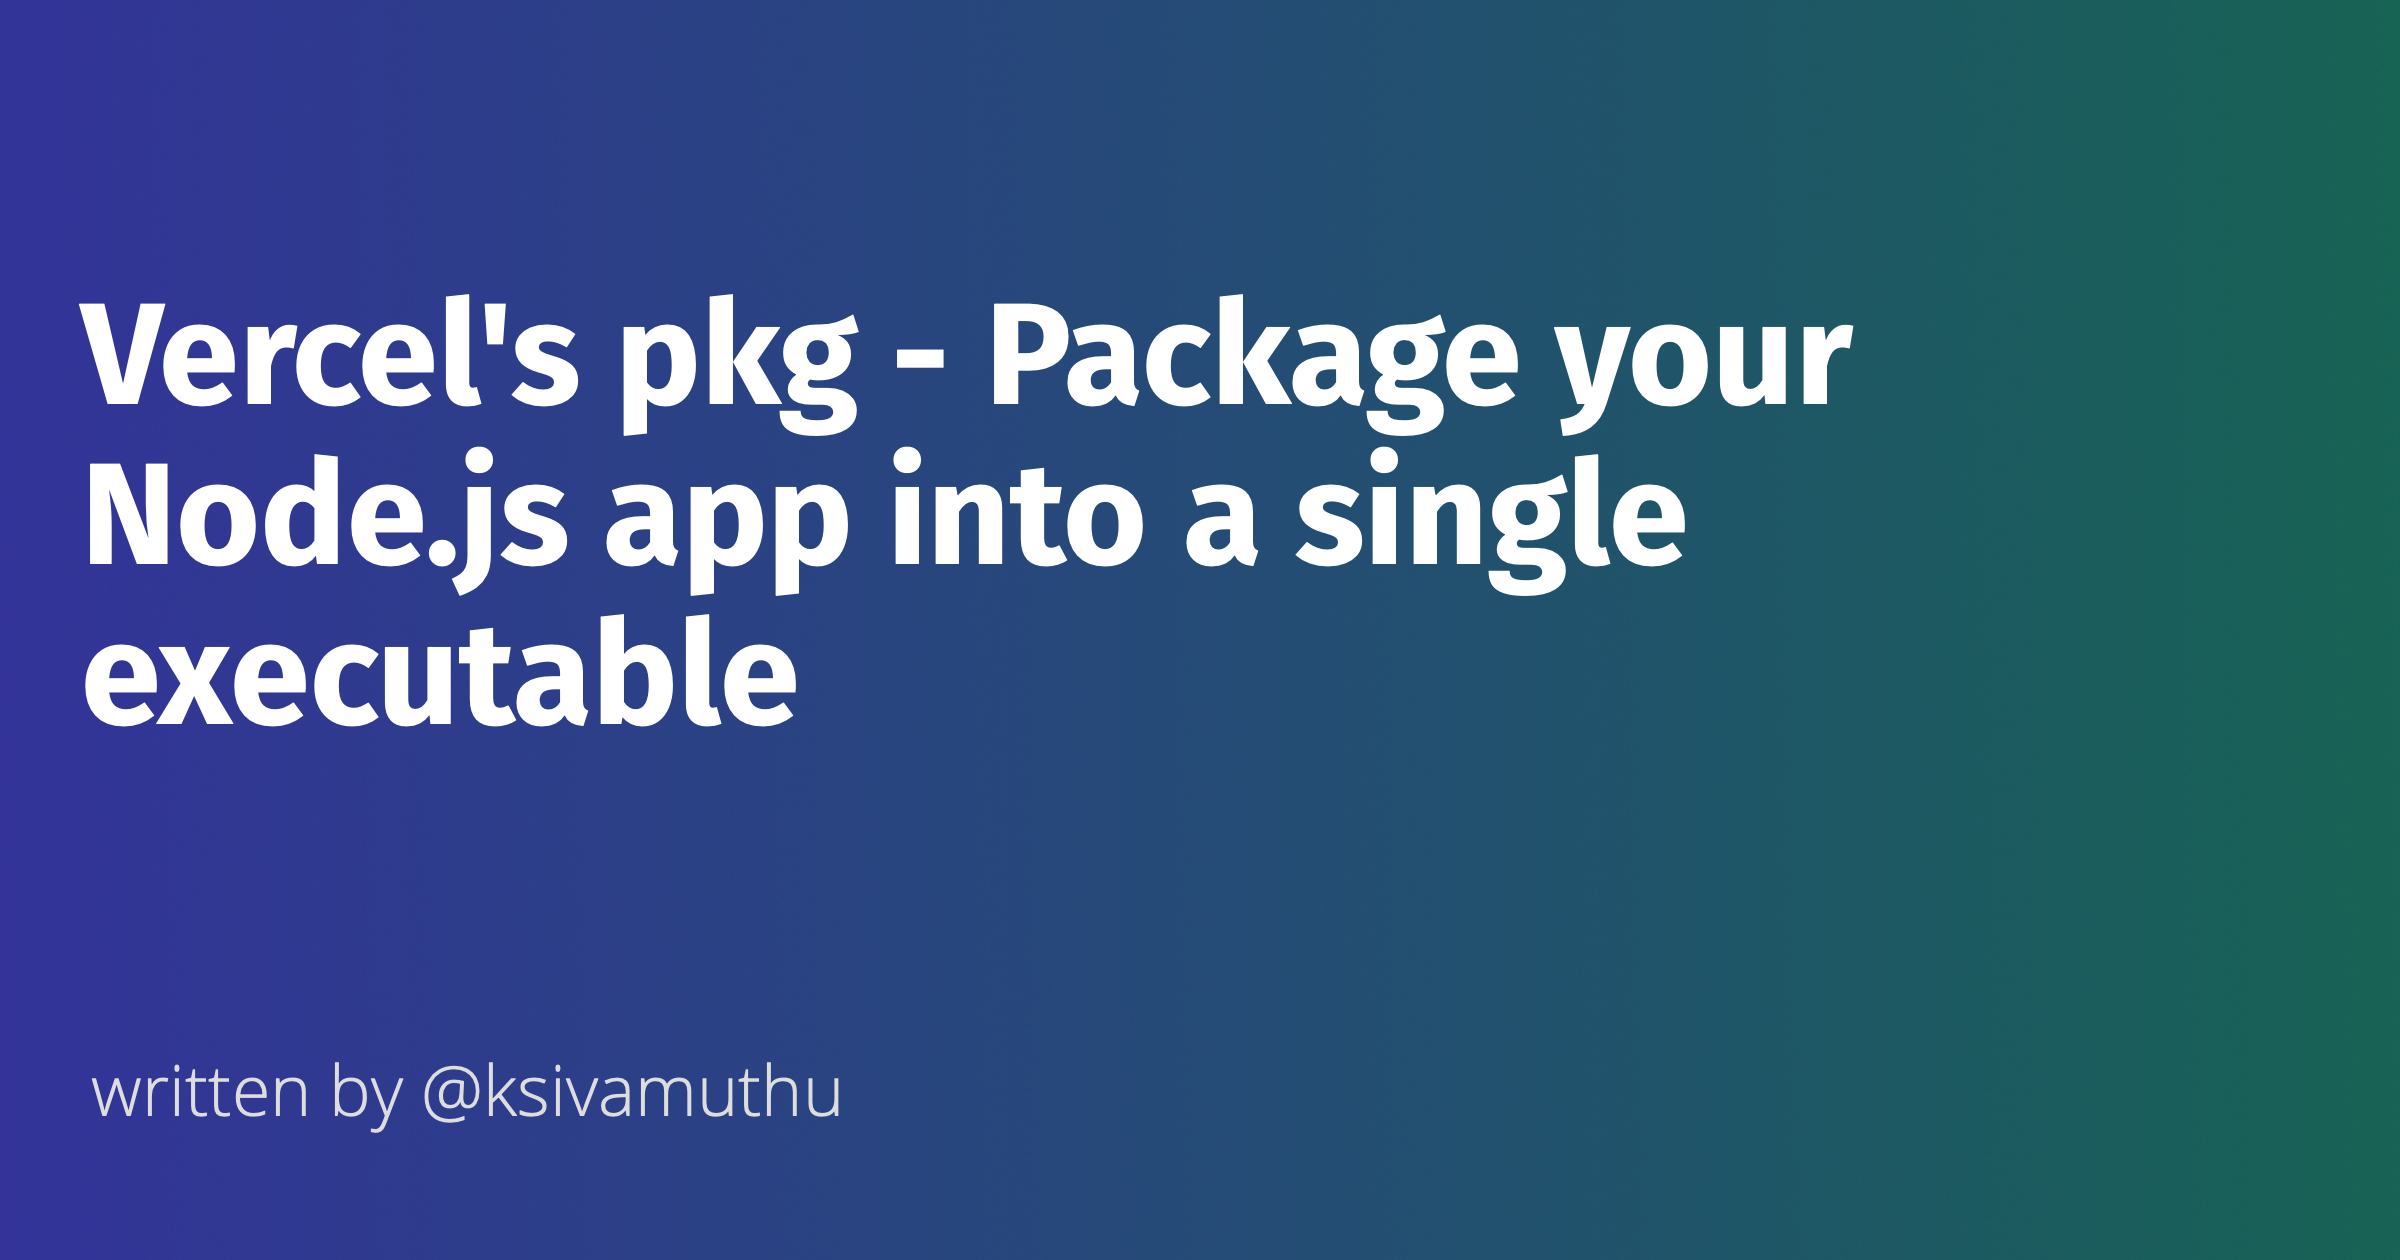 Vercel's pkg - Package your Node.js app into a single executable